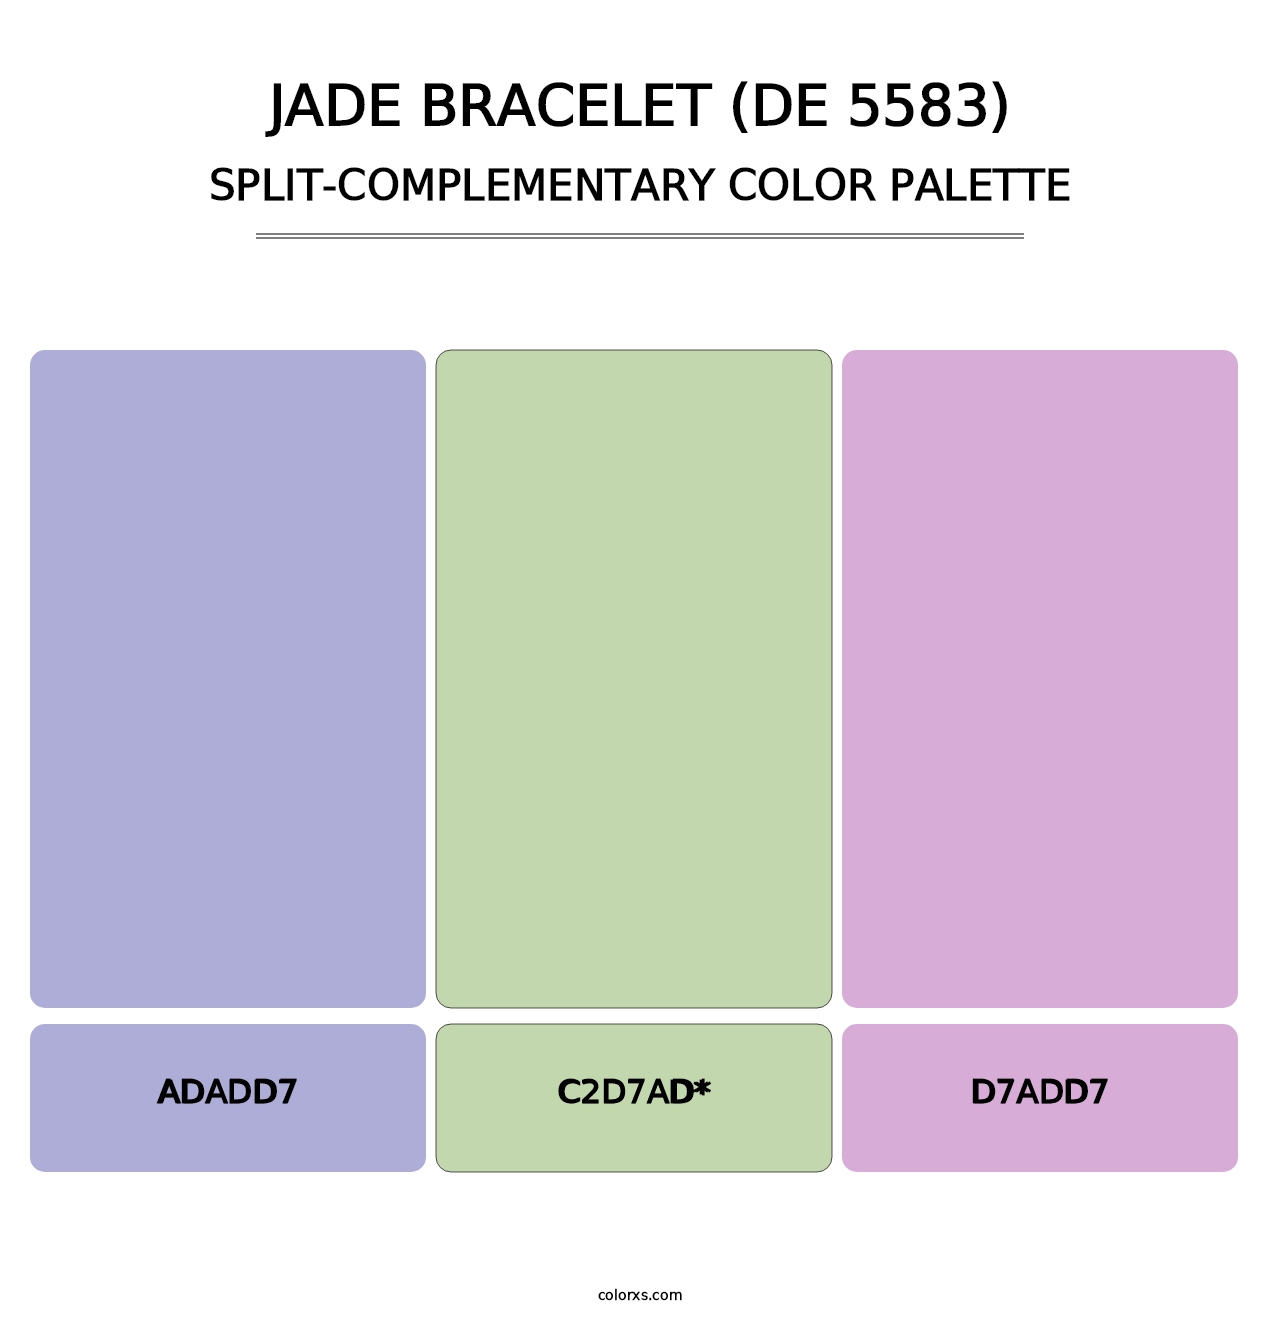 Jade Bracelet (DE 5583) - Split-Complementary Color Palette